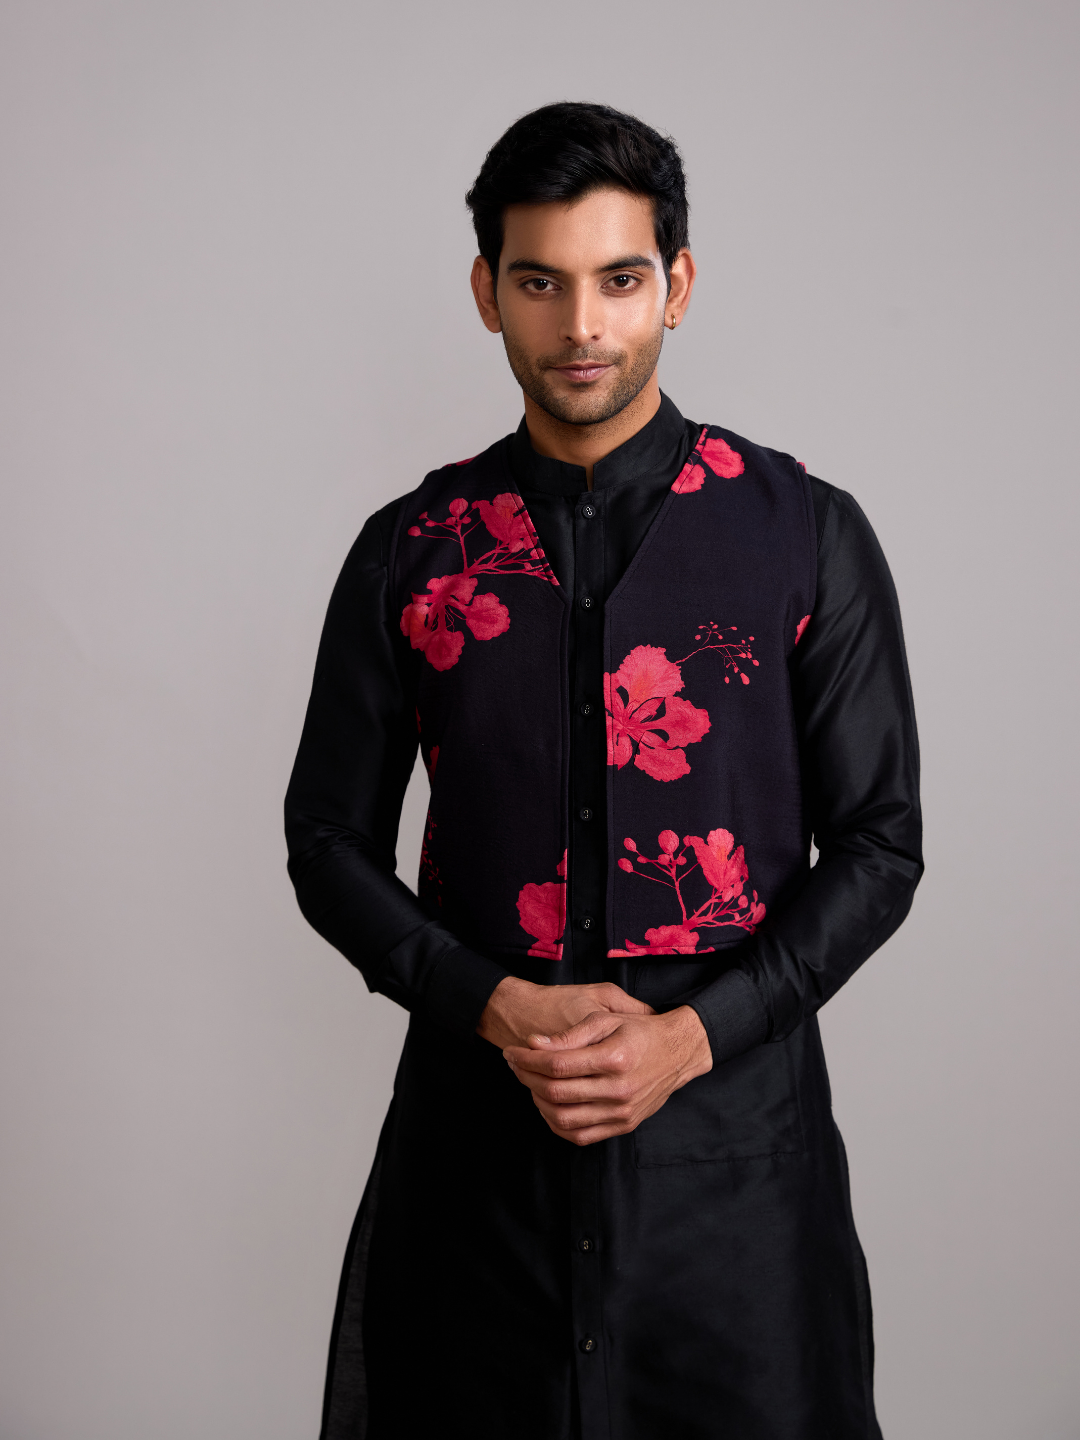 Gulmohar print jacket with mandarin collar straight kurta paired with overlapped hem pants- Rich black